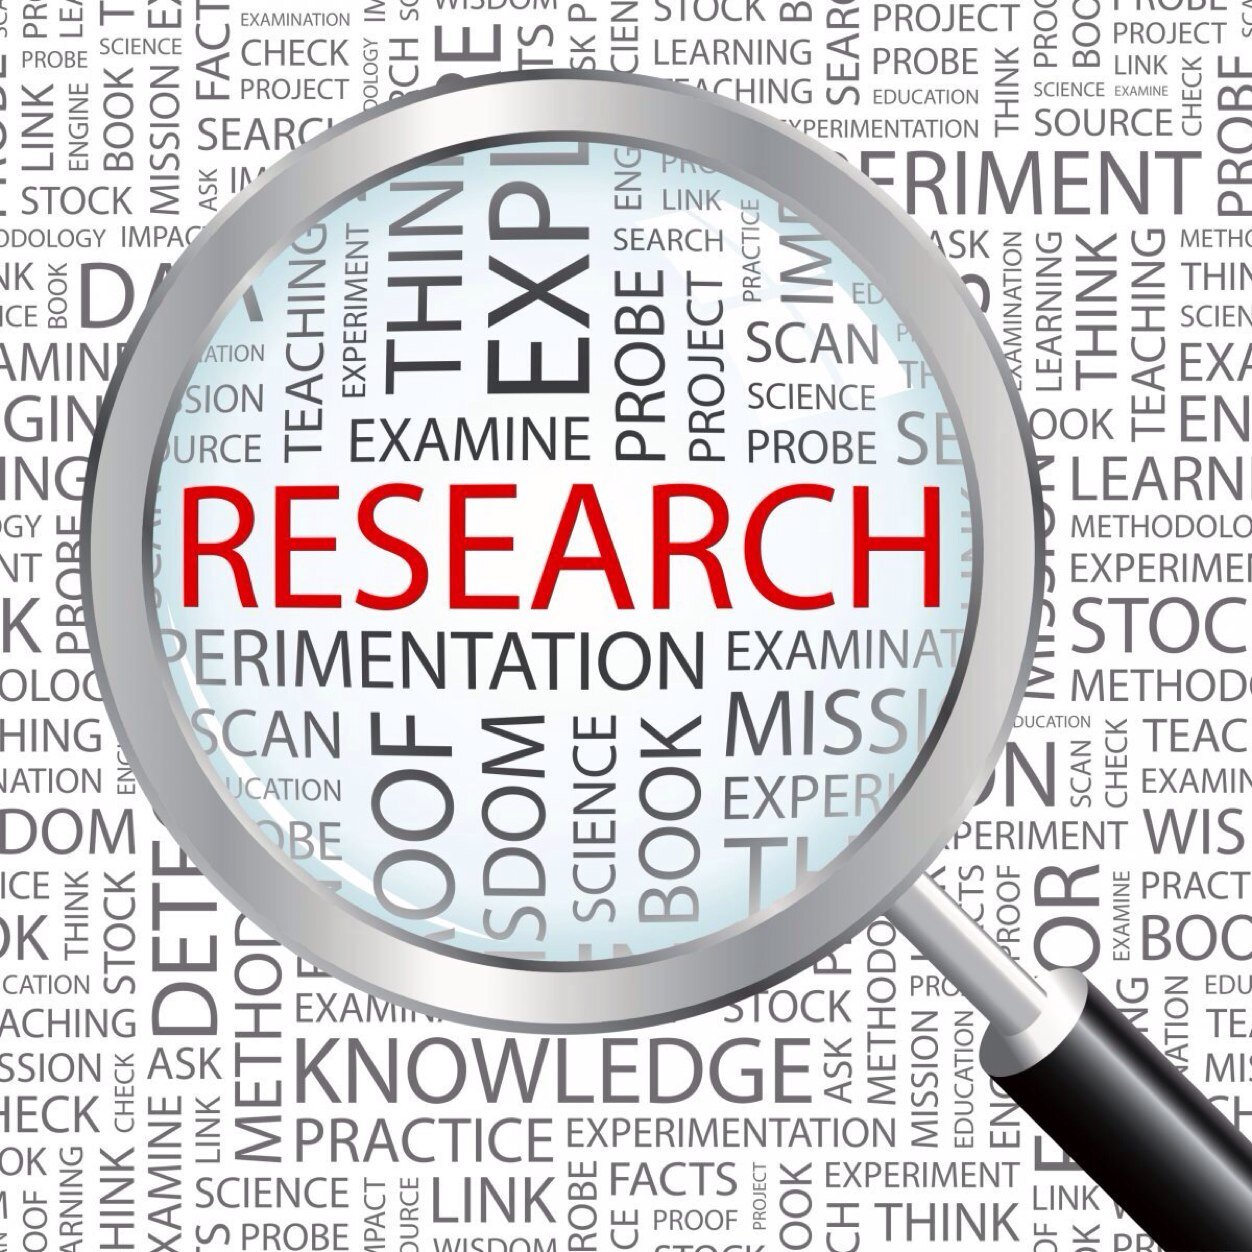 research skills methodology